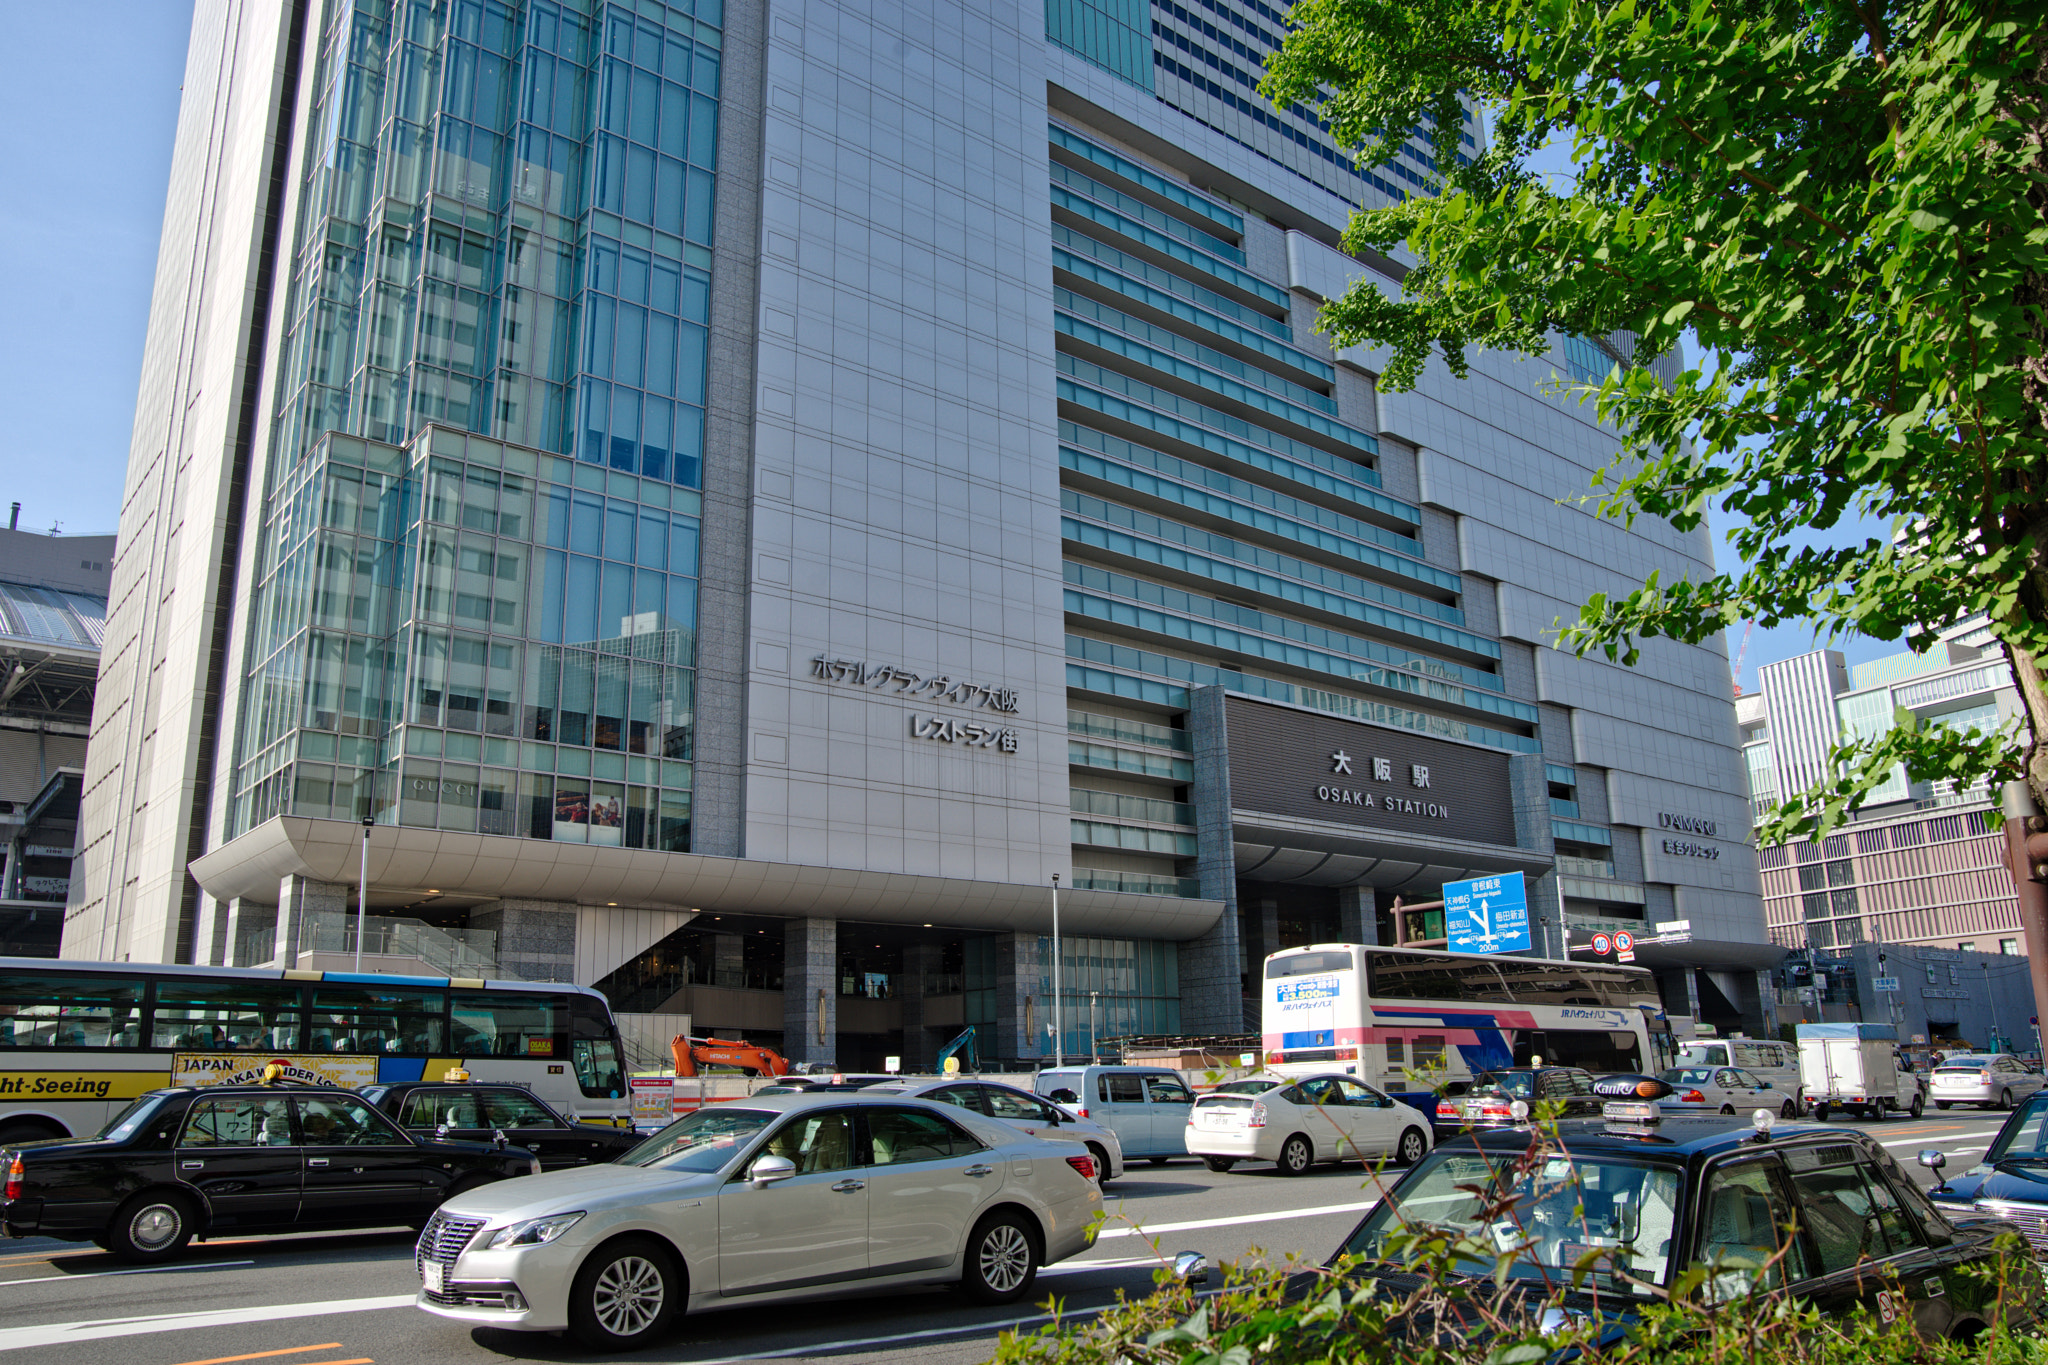 Sony a7 II sample photo. Osaka station photography